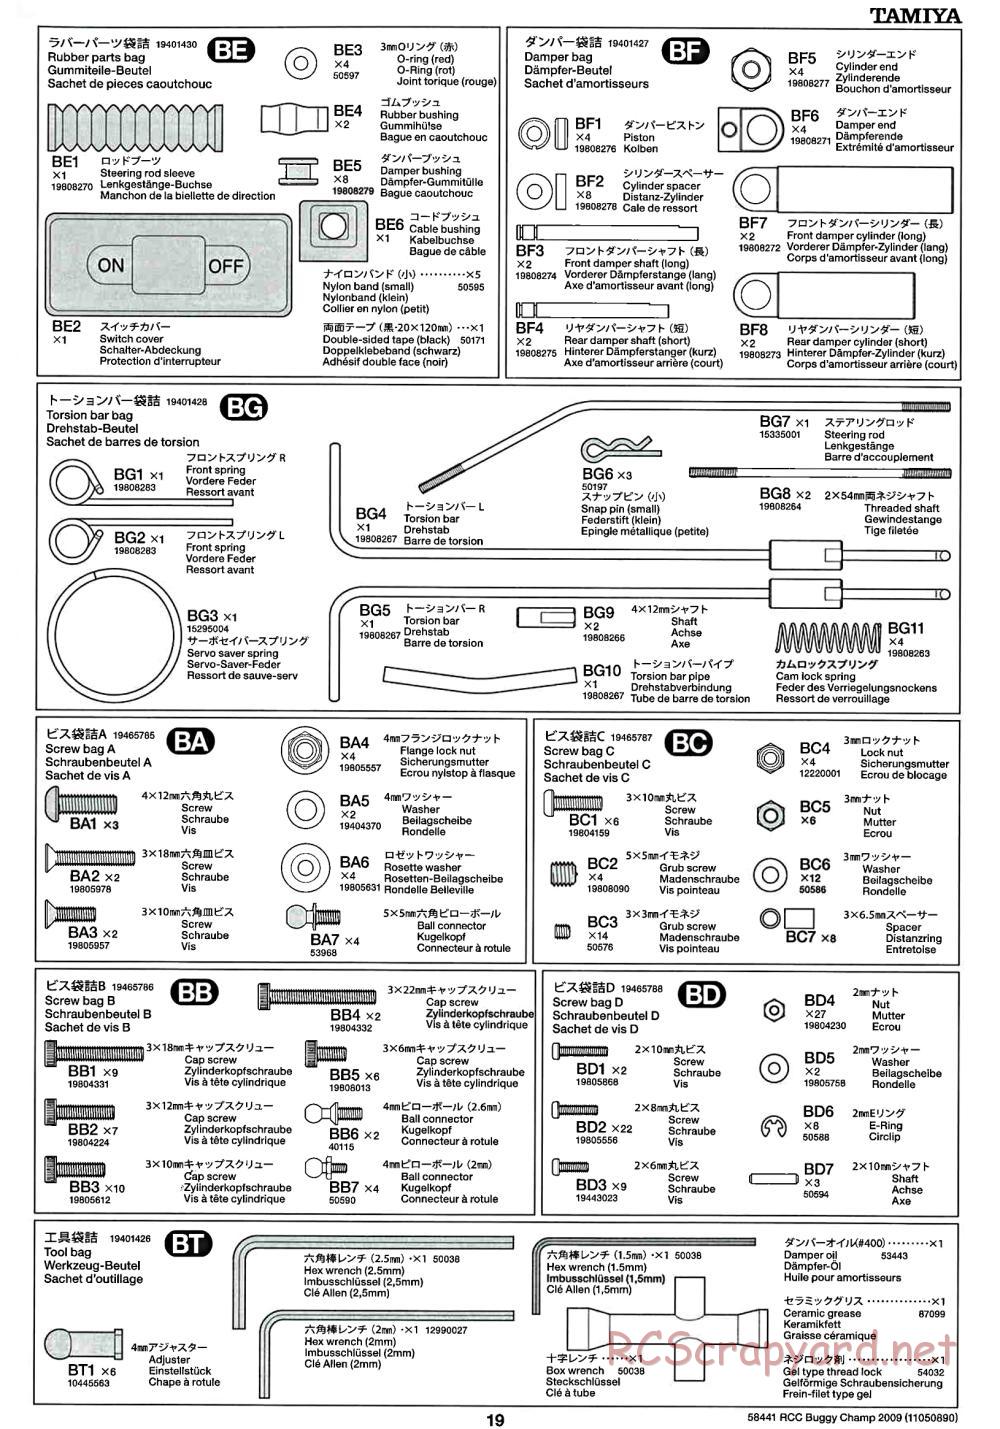 Tamiya - Buggy Champ Chassis - Manual - Page 19